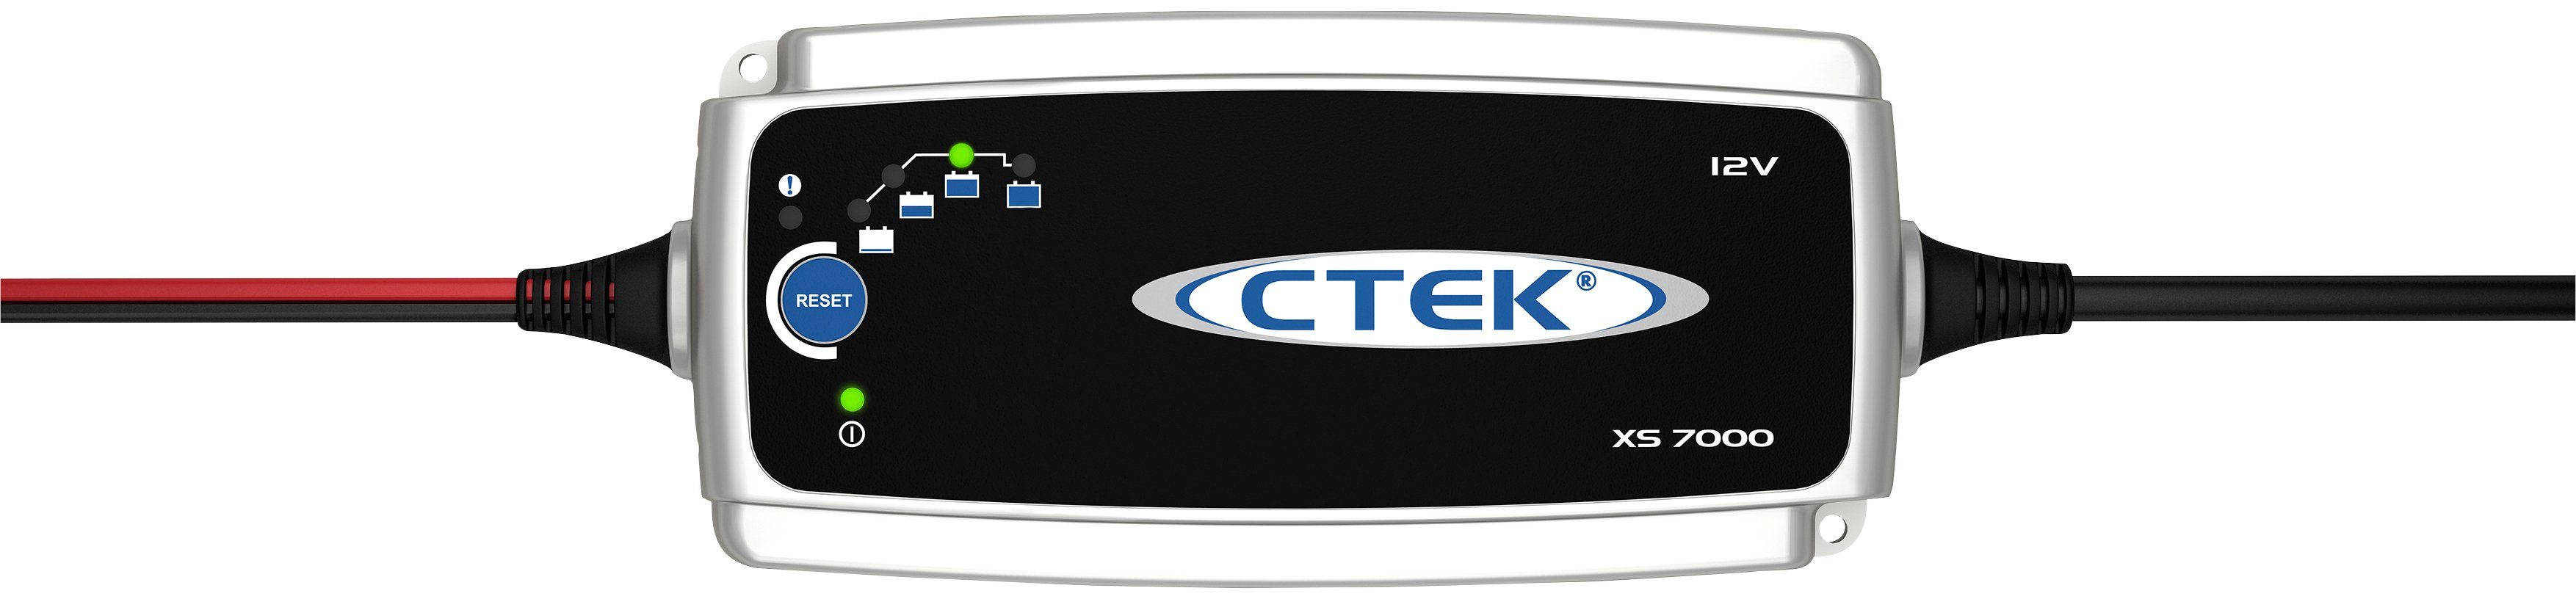 Entsulfatierungsfunktion) XS7000 CTEK Batterie-Ladegerät (Patentierte